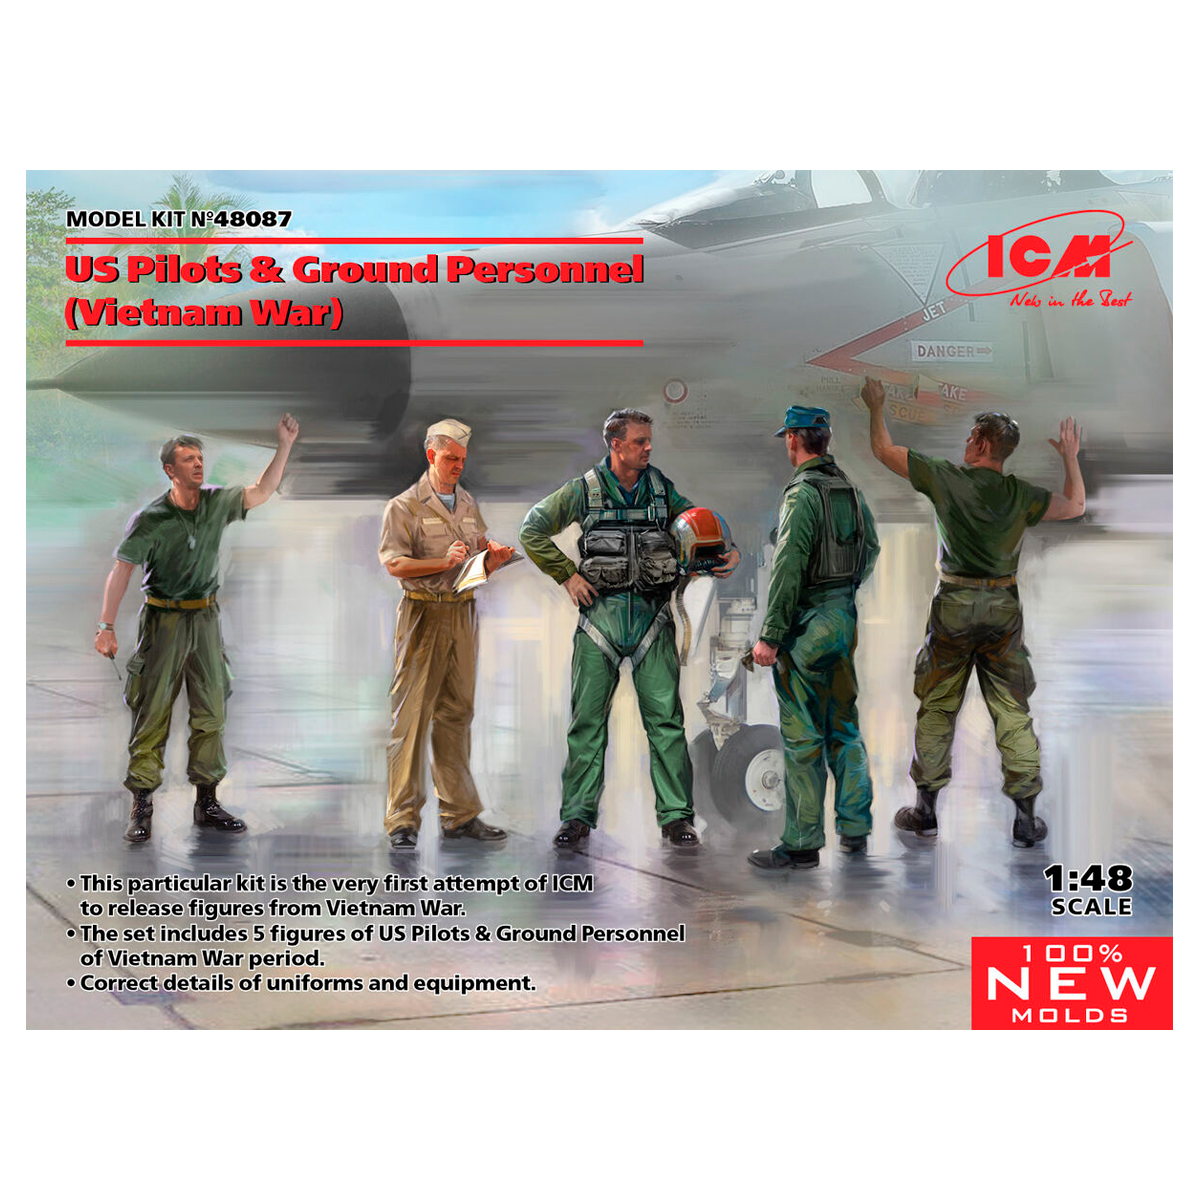 US Pilots & Ground Personnel (Vietnam War) (5 figures) (100% new molds) 1/48